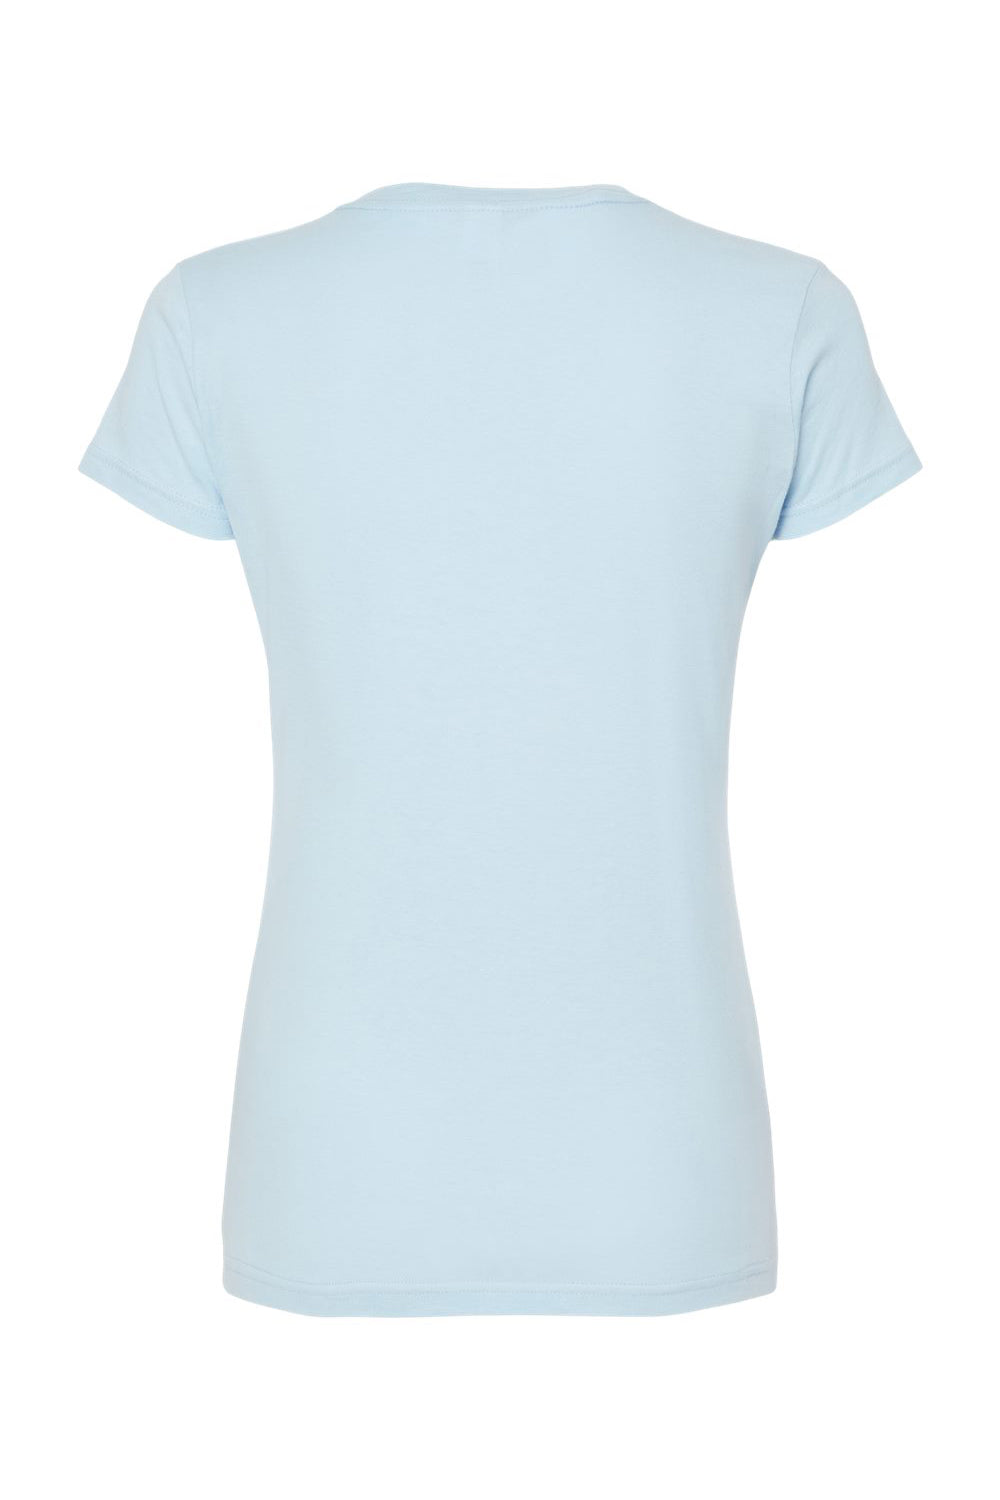 Tultex 213 Womens Fine Jersey Slim Fit Short Sleeve Crewneck T-Shirt Baby Blue Flat Back